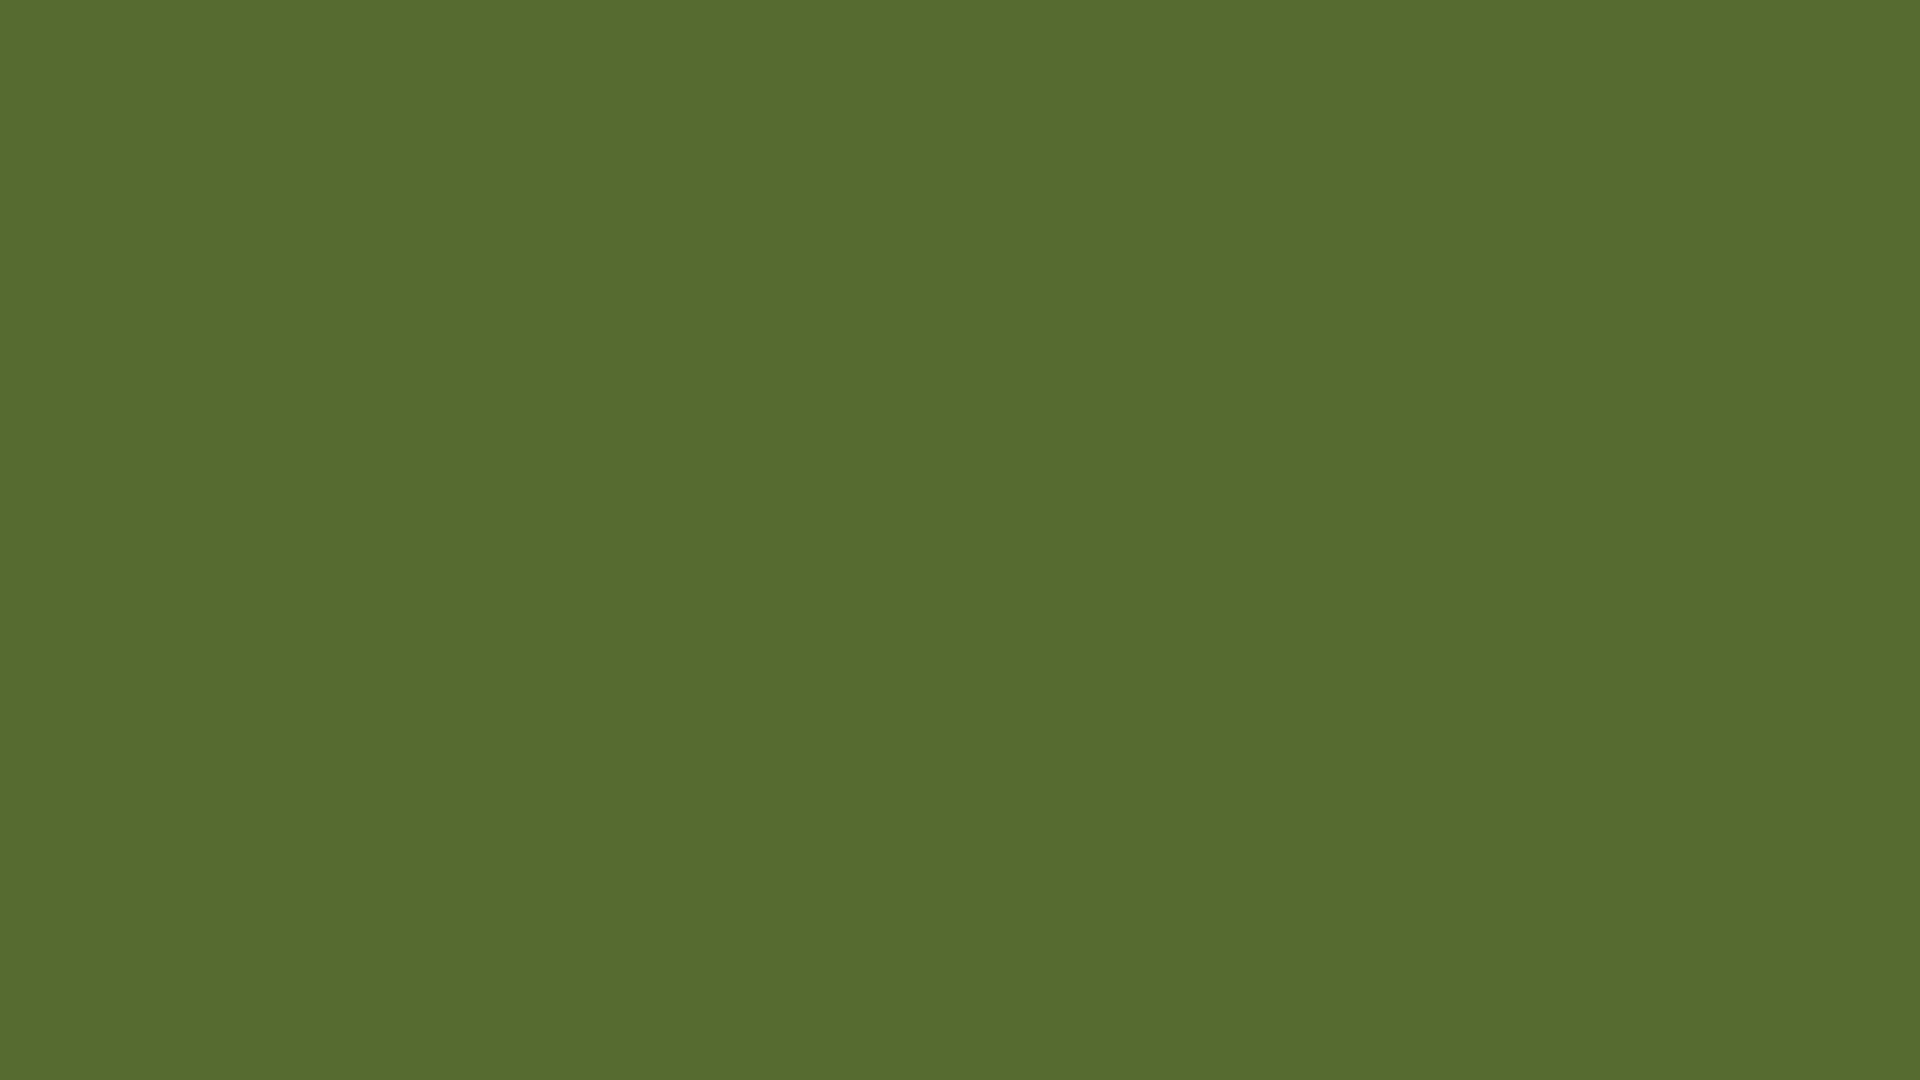 1920x1080 Dark Olive Green Solid Color Background